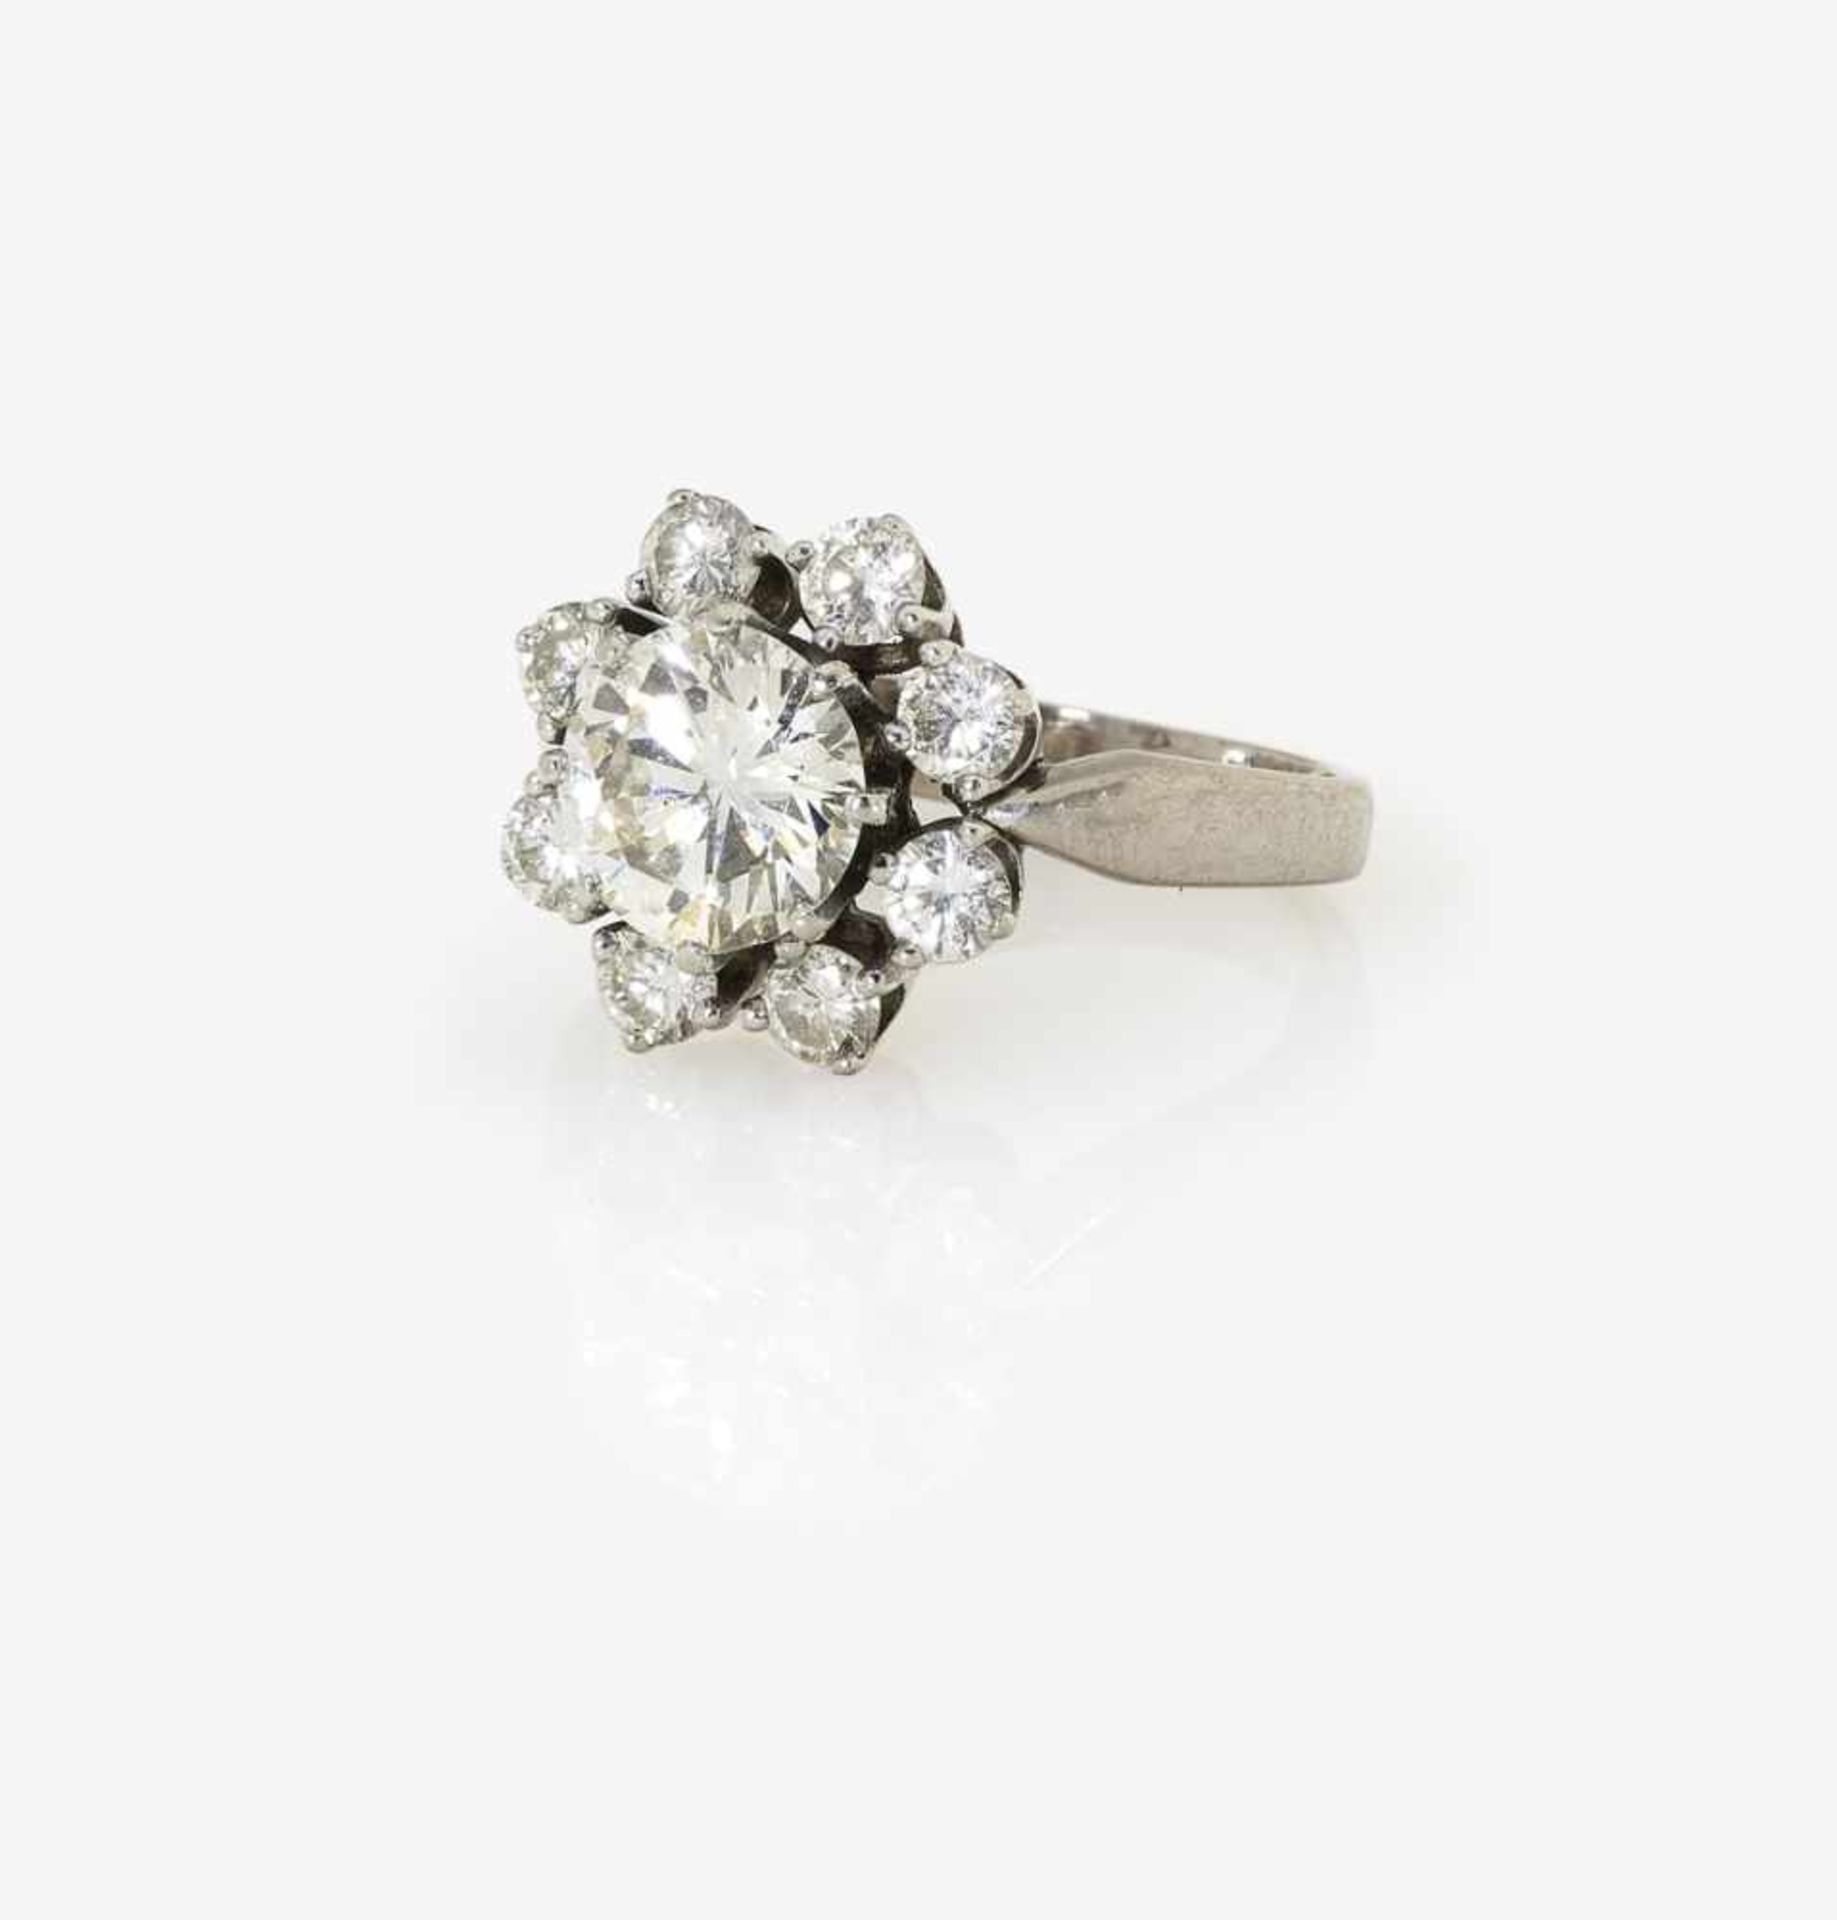 A Diamond Cluster RingGermany, 1950s-1960s 18K white gold (750/-), tested. 1 brilliant-cut diamond